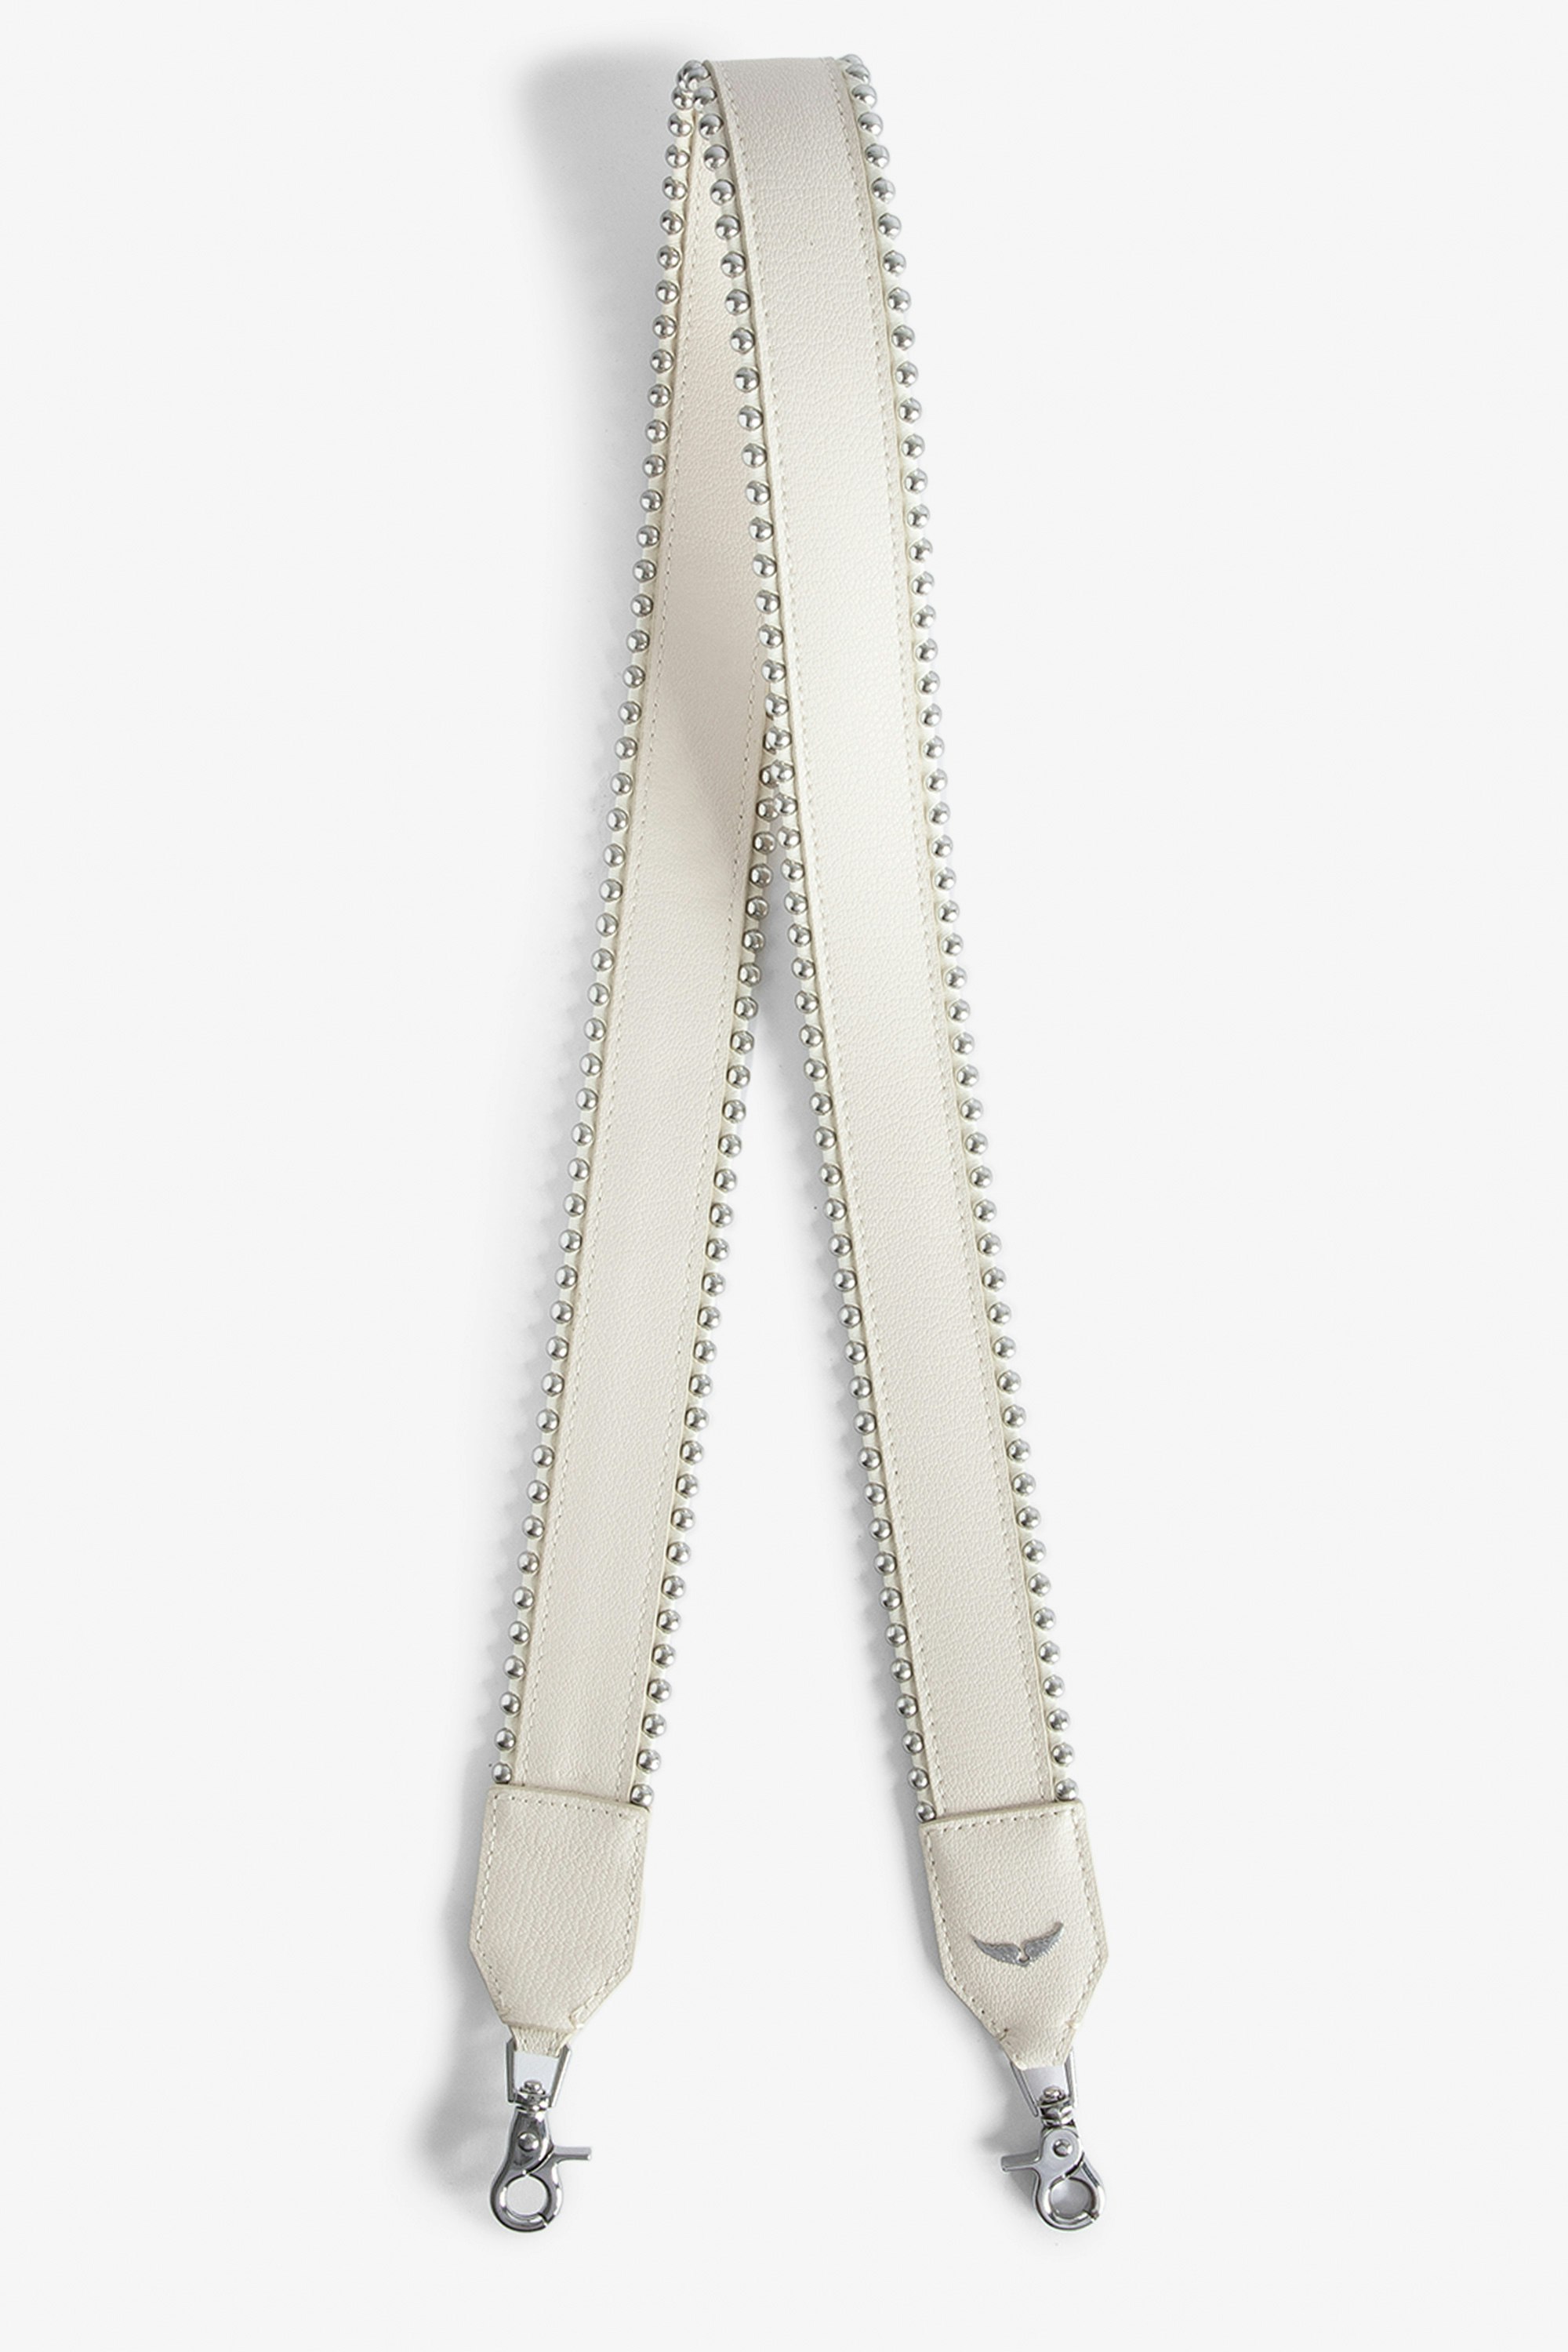 Studs Piping Shoulder Strap Women’s adjustable ecru grained leather shoulder strap with studded trim.